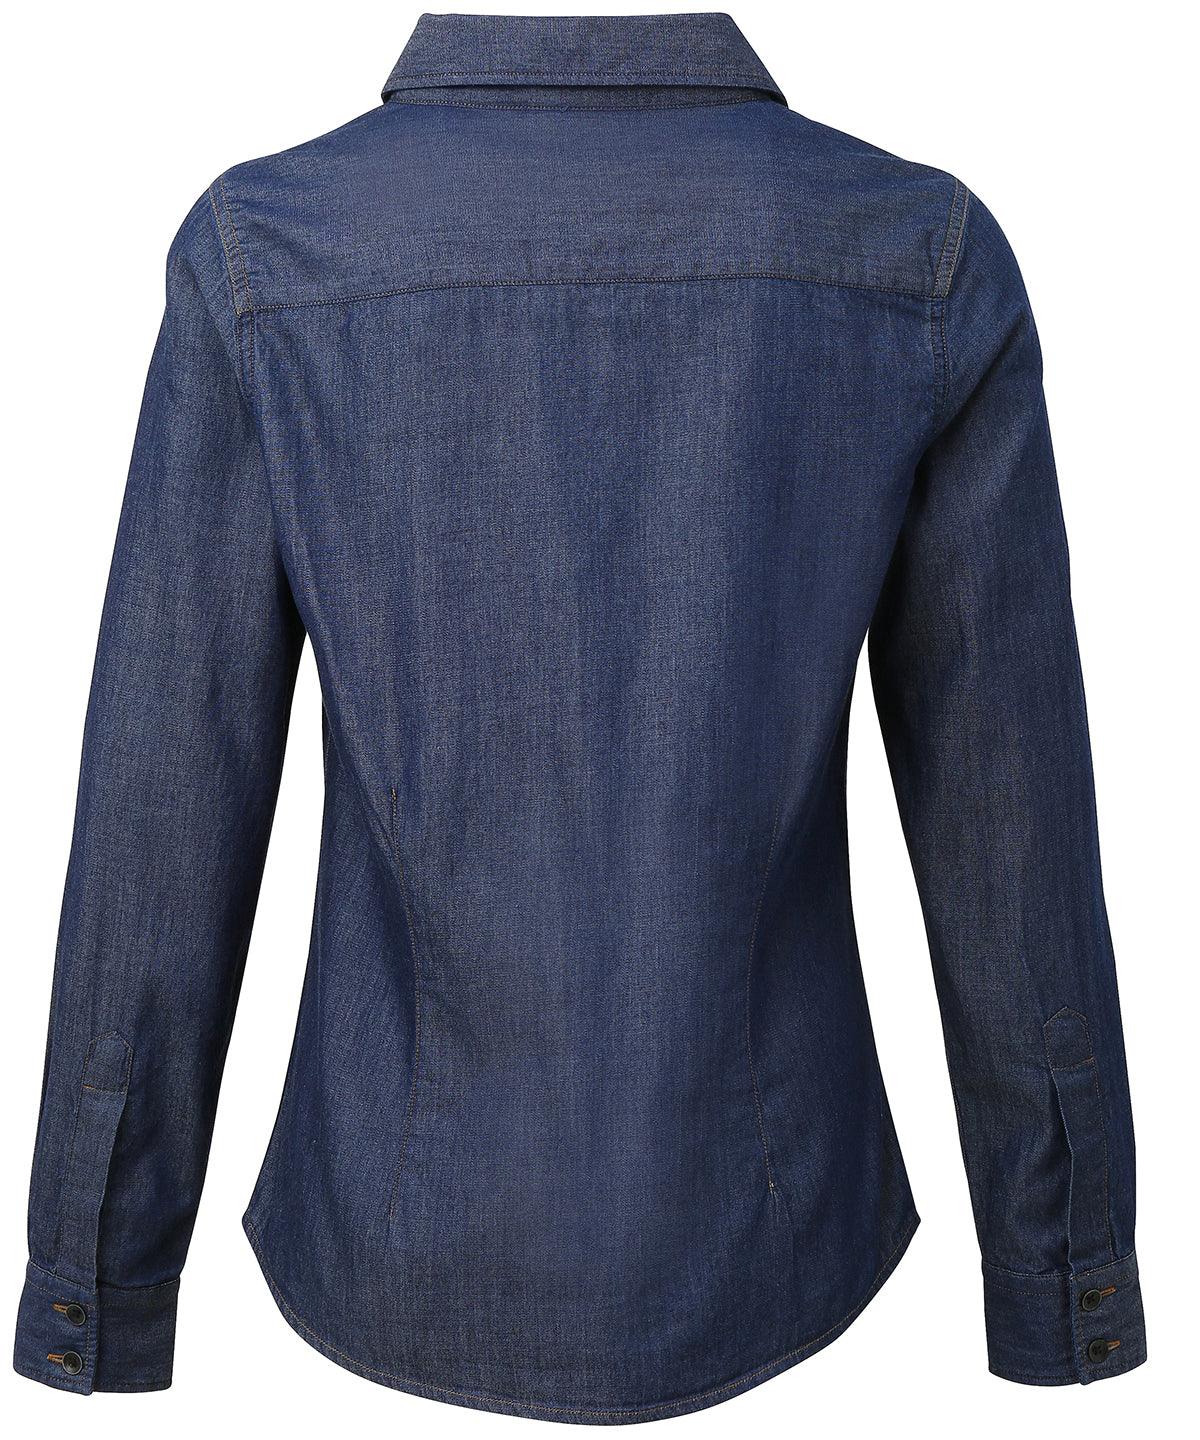 Women's jeans stitch denim shirt Shirts Schoolwear Centres denim, denim blouse, denim shirt Schoolwear Centres